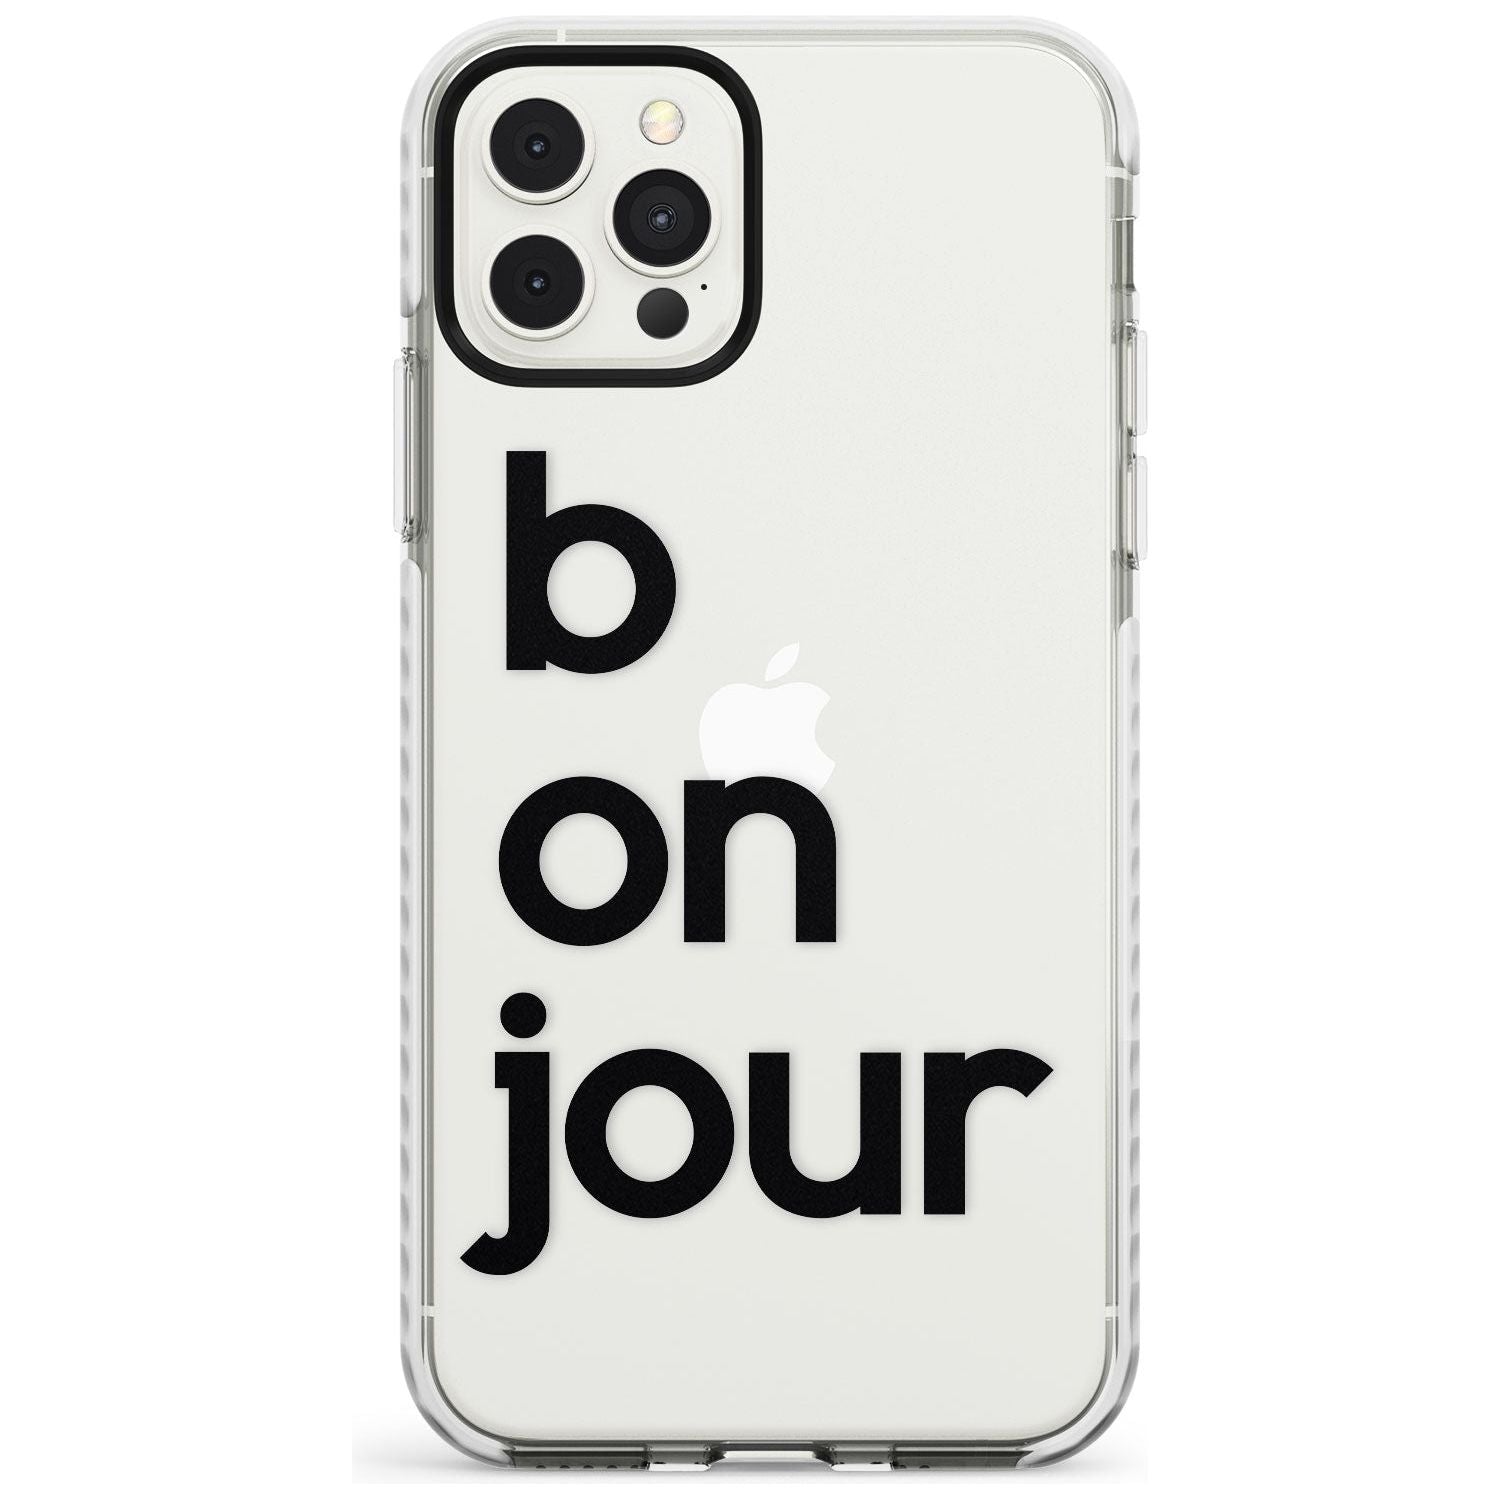 Bonjour Slim TPU Phone Case for iPhone 11 Pro Max